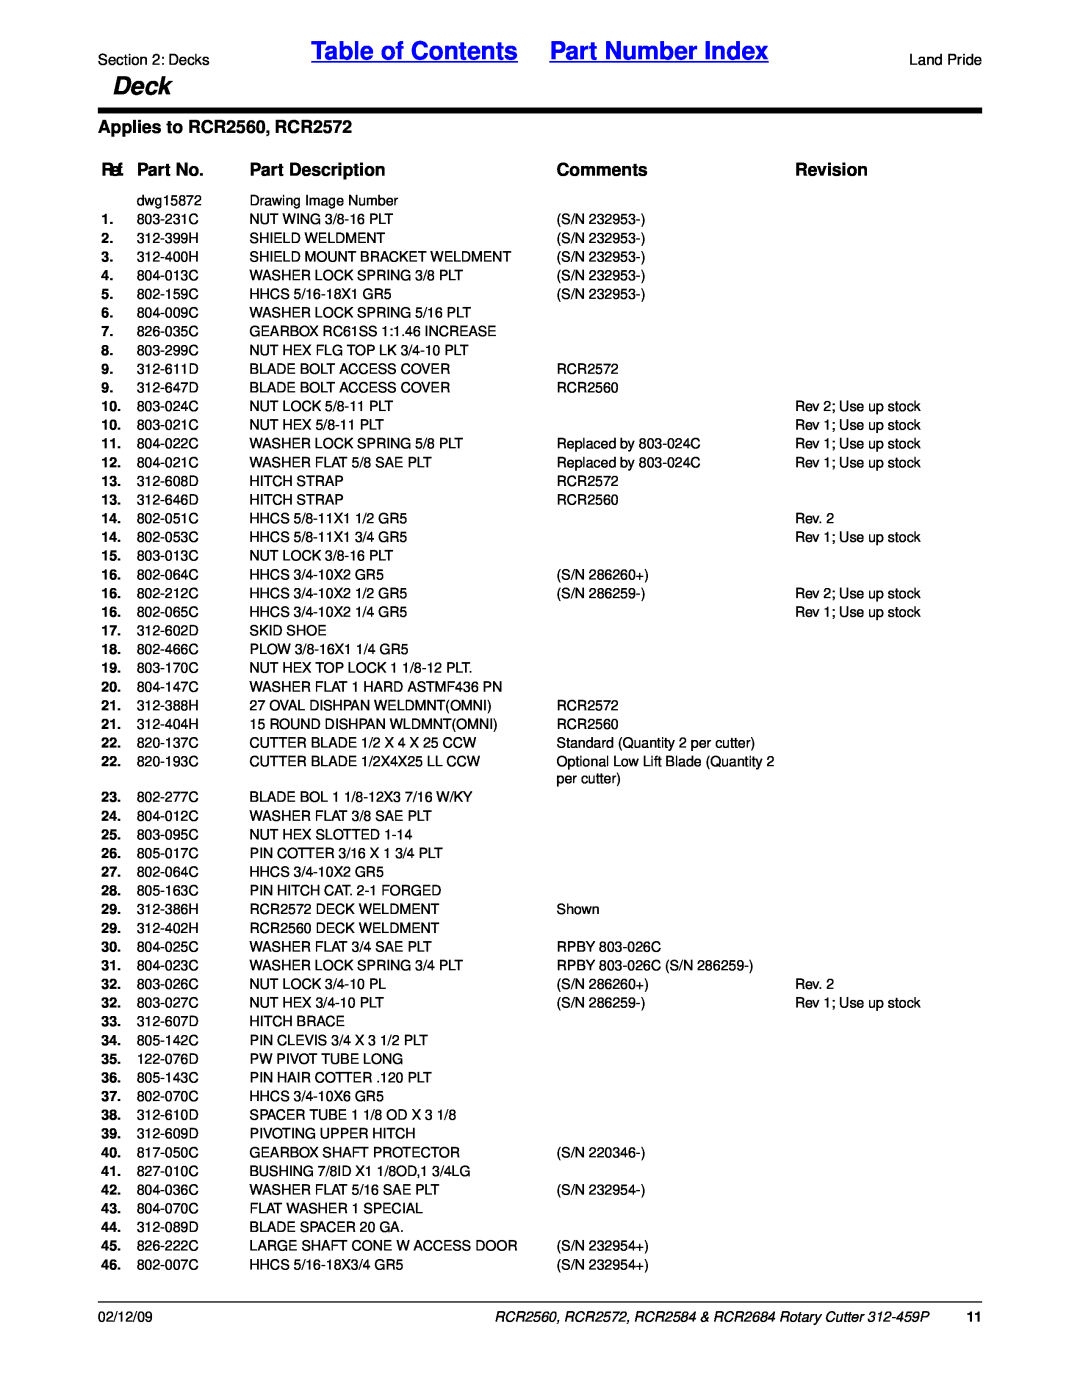 Land Pride manual Table of Contents Part Number Index, Deck, Applies to RCR2560, RCR2572, Ref. Part No, Part Description 